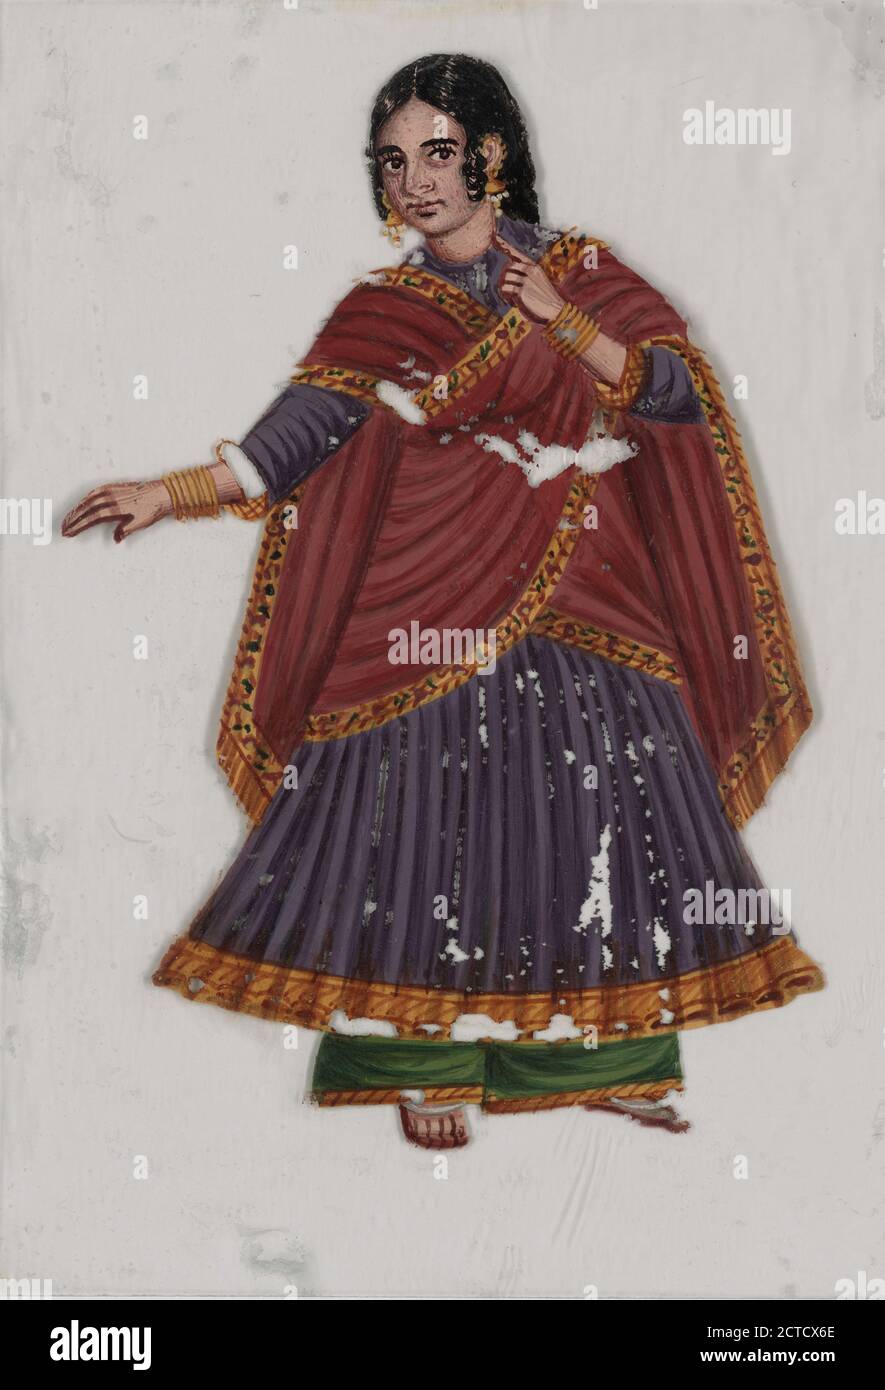 Niña bailando en falda púrpura y bufanda roja, brazo derecho extendido, imagen fija, dibujos, 1780 - 1858 Foto de stock